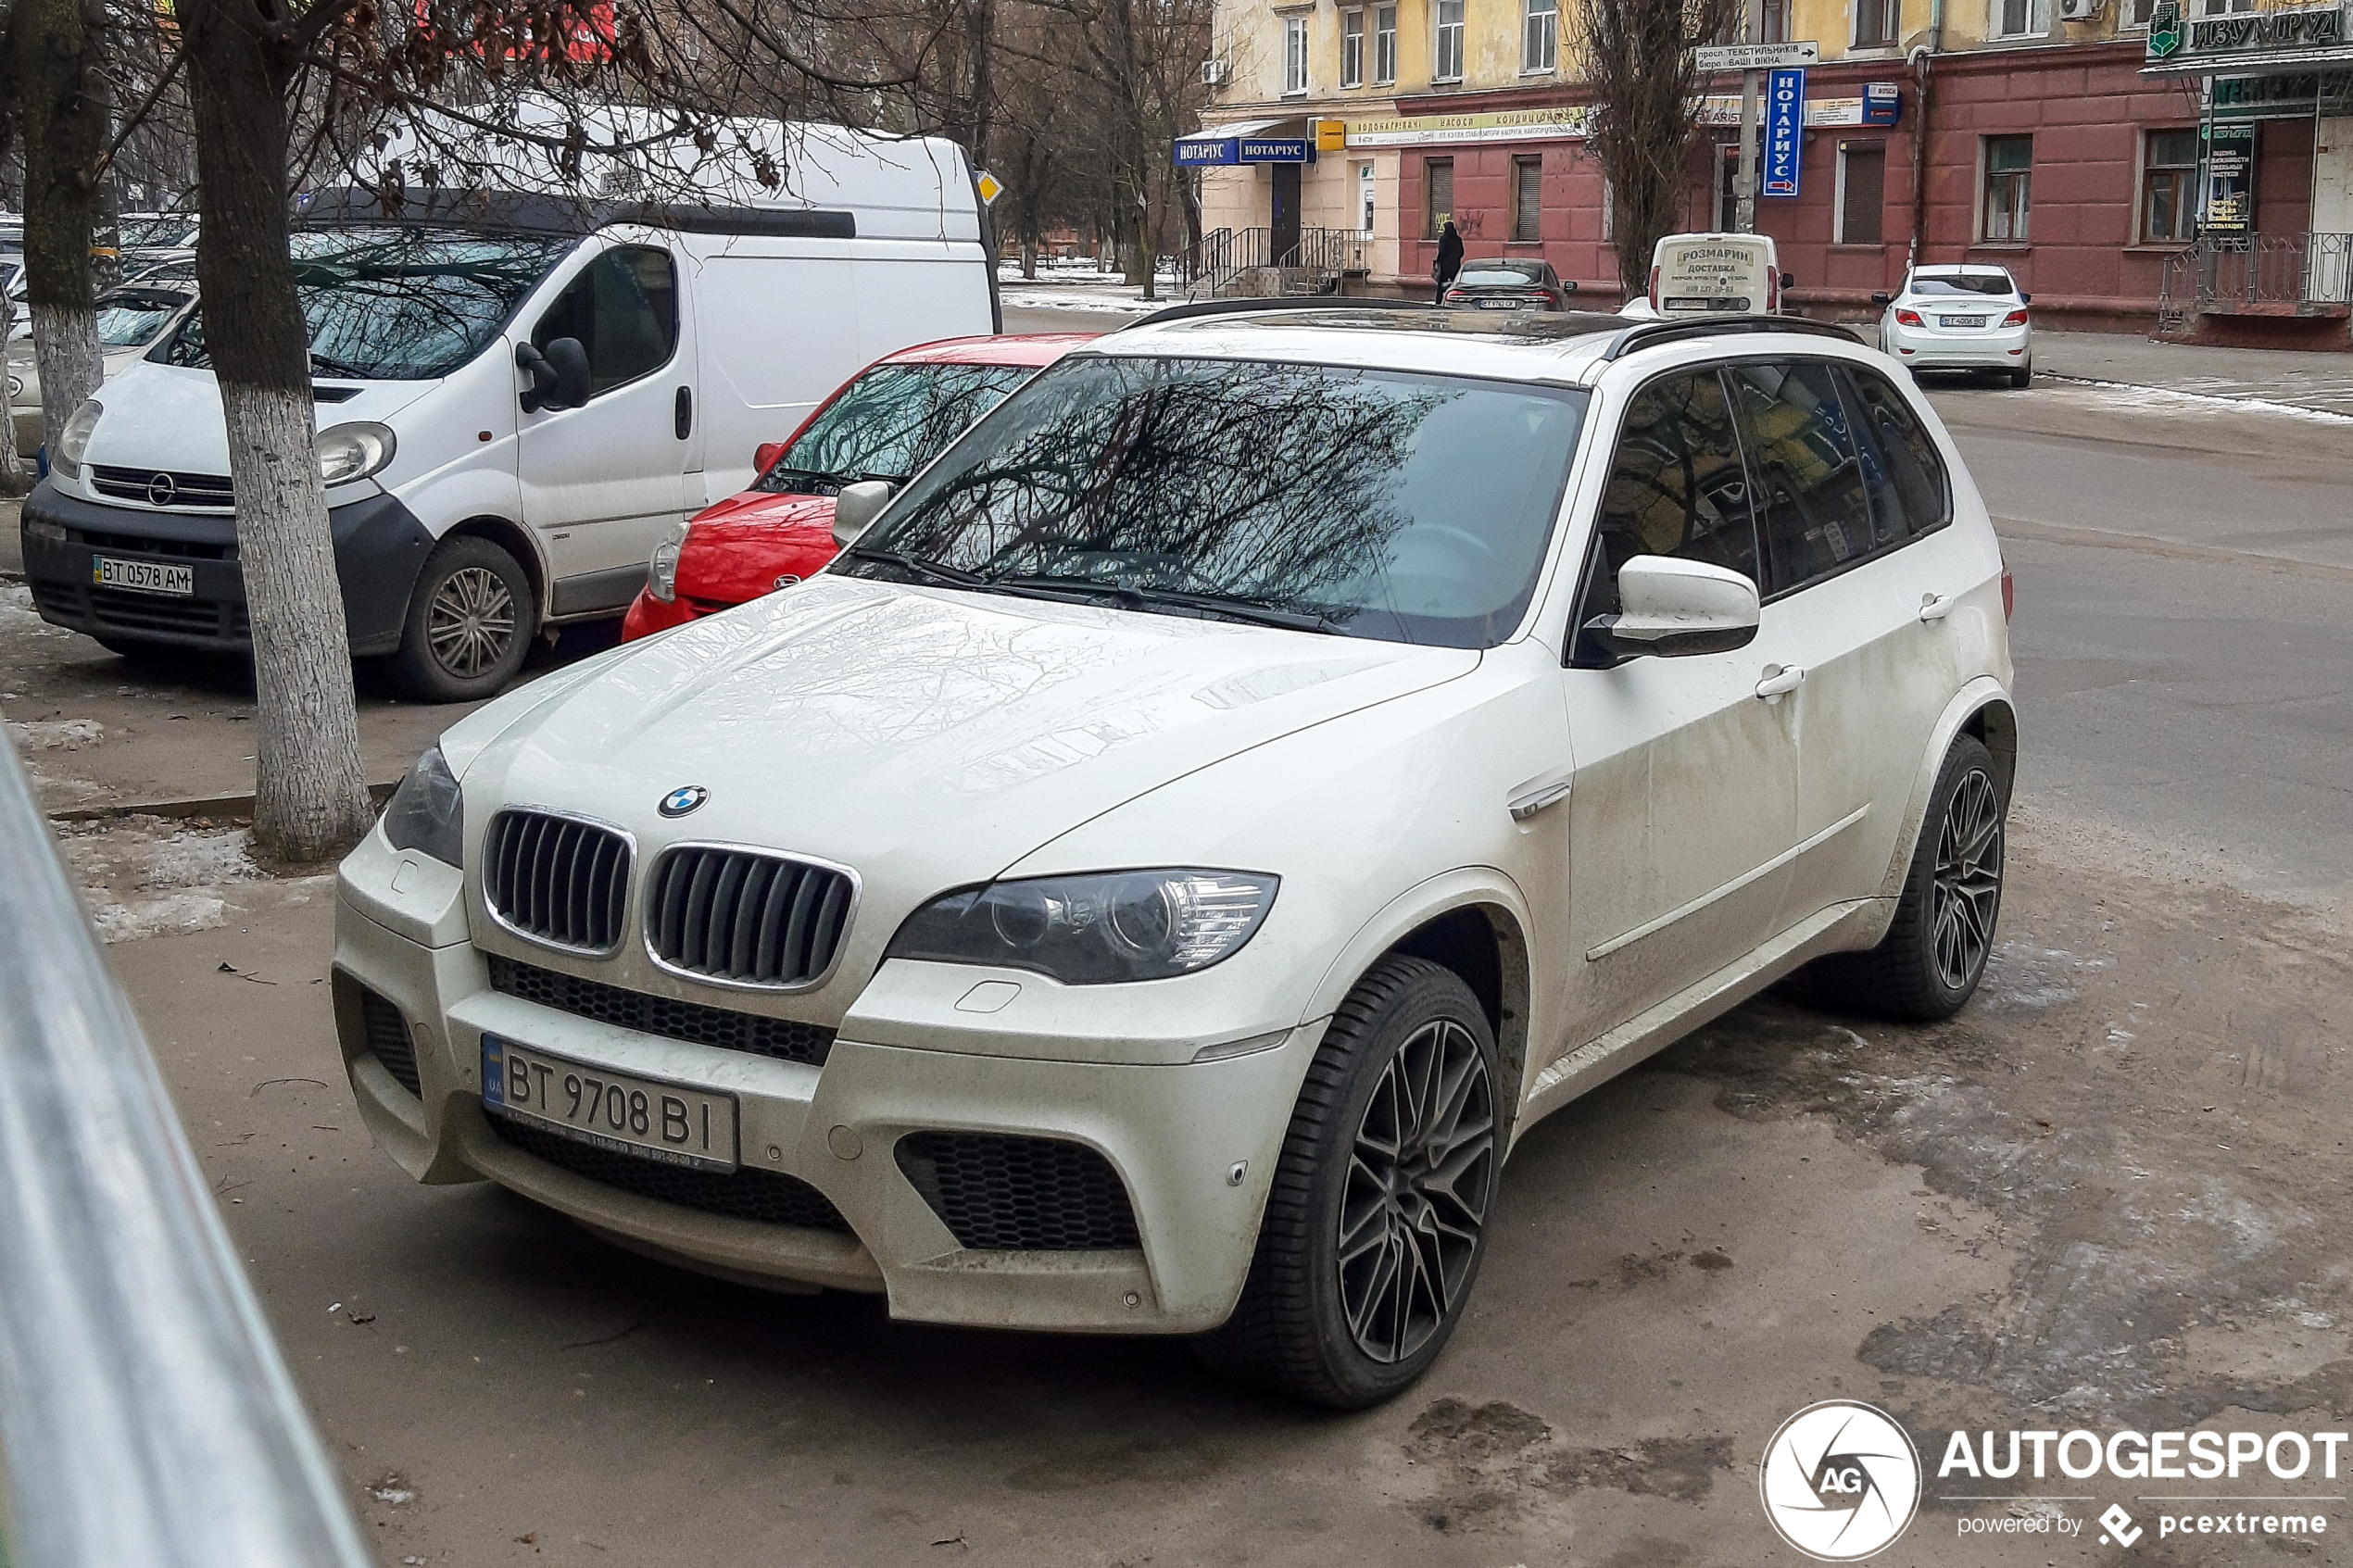 BMW X5 M E70 - 2 February 2021 - Autogespot